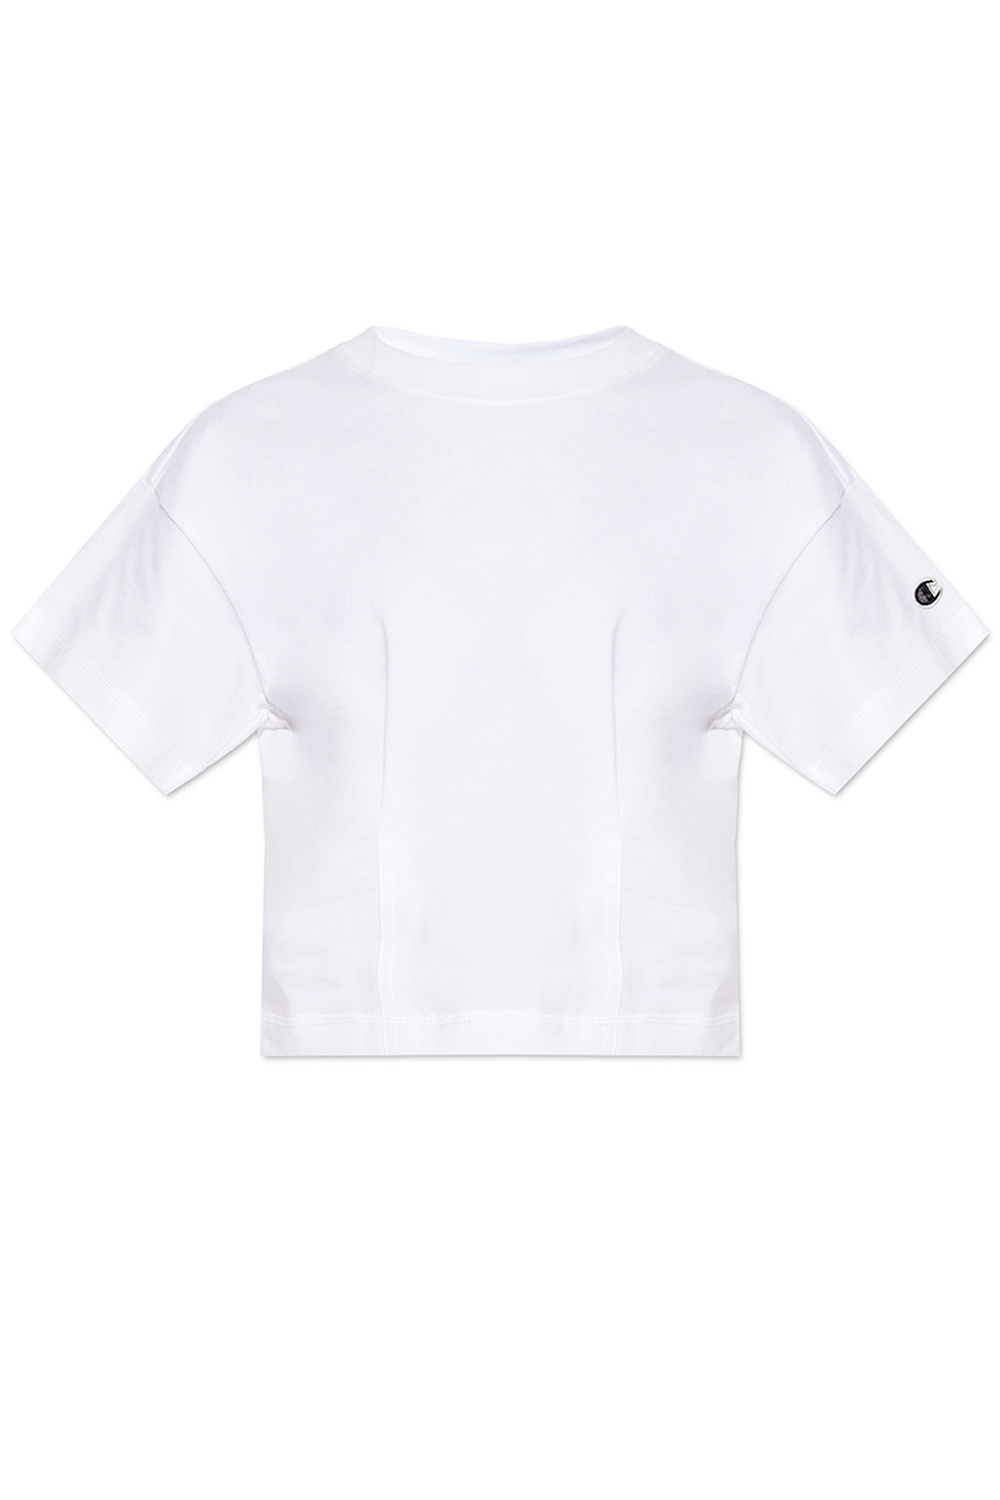 shirt Champion White with - Germany neck logo logo-print - Sweater Nude T - crew IetpShops sweatshirt